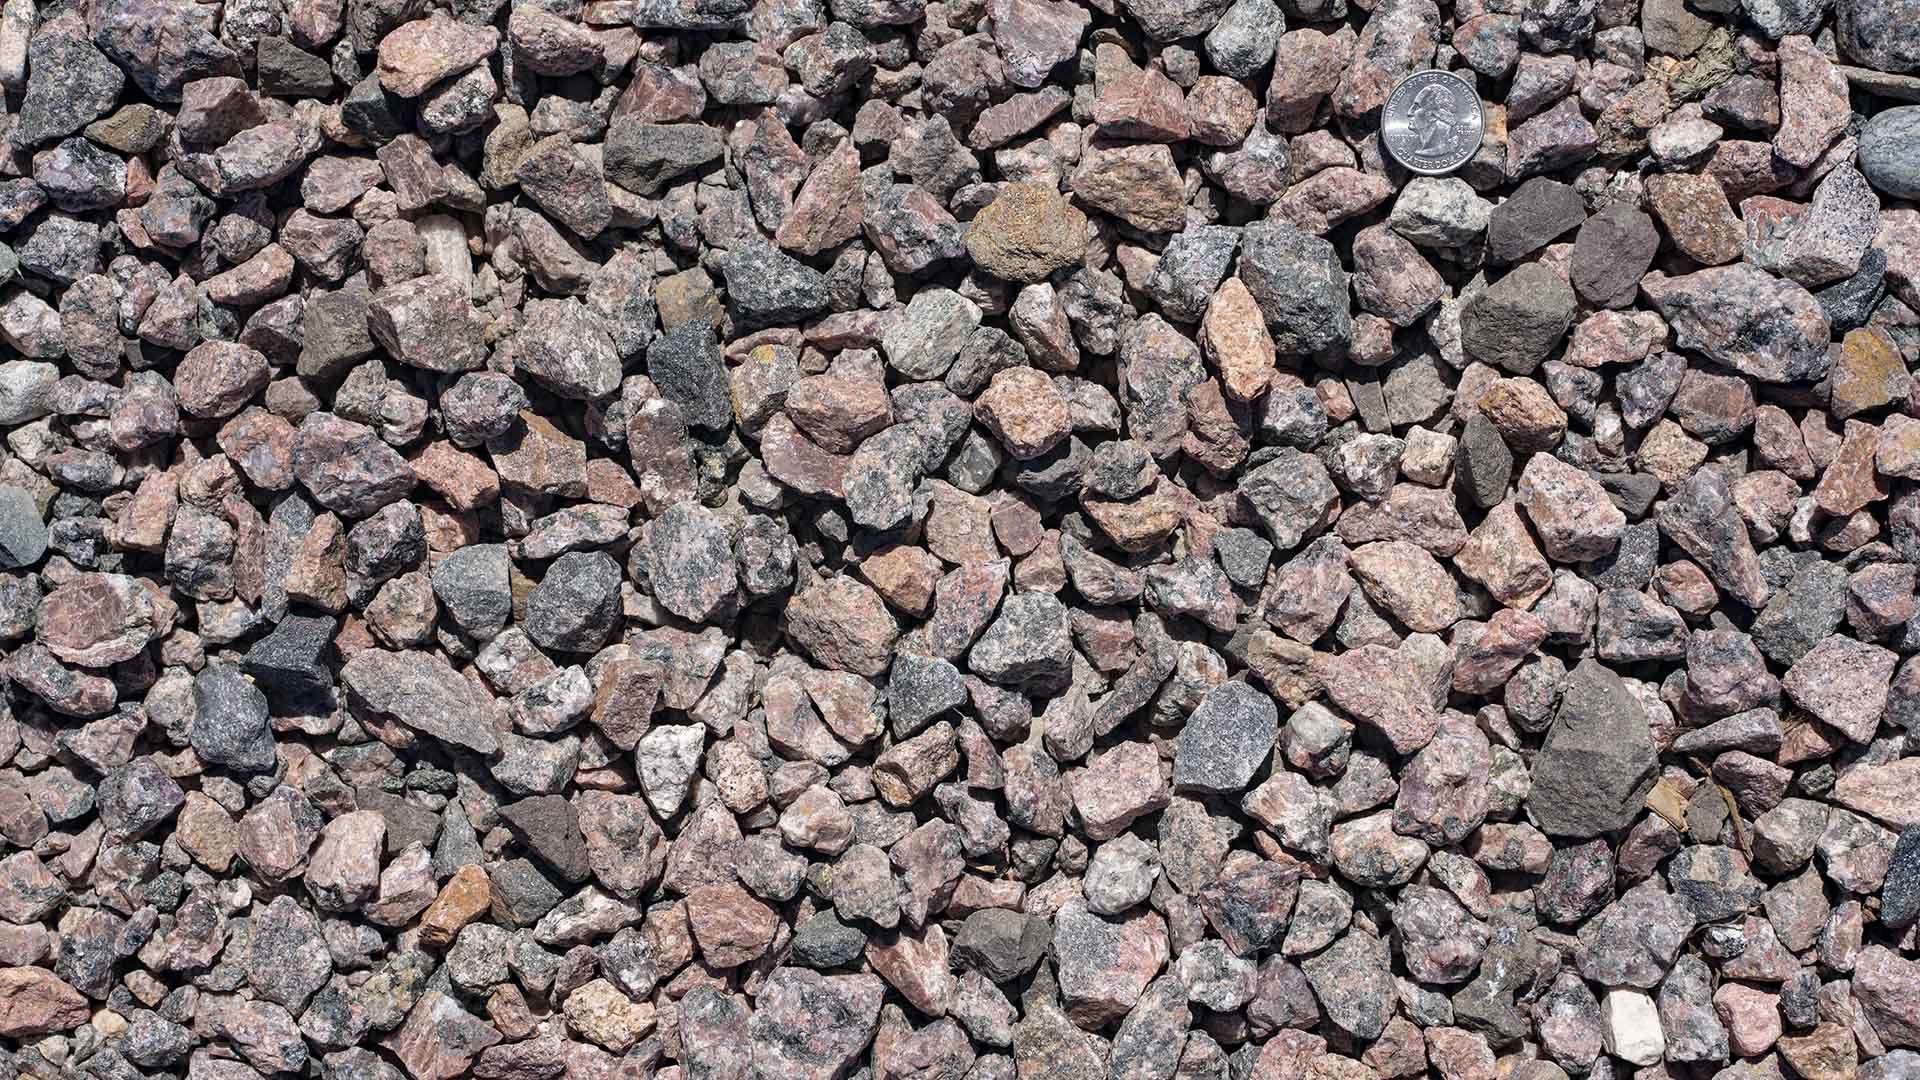 View Photos of Granite Rocks